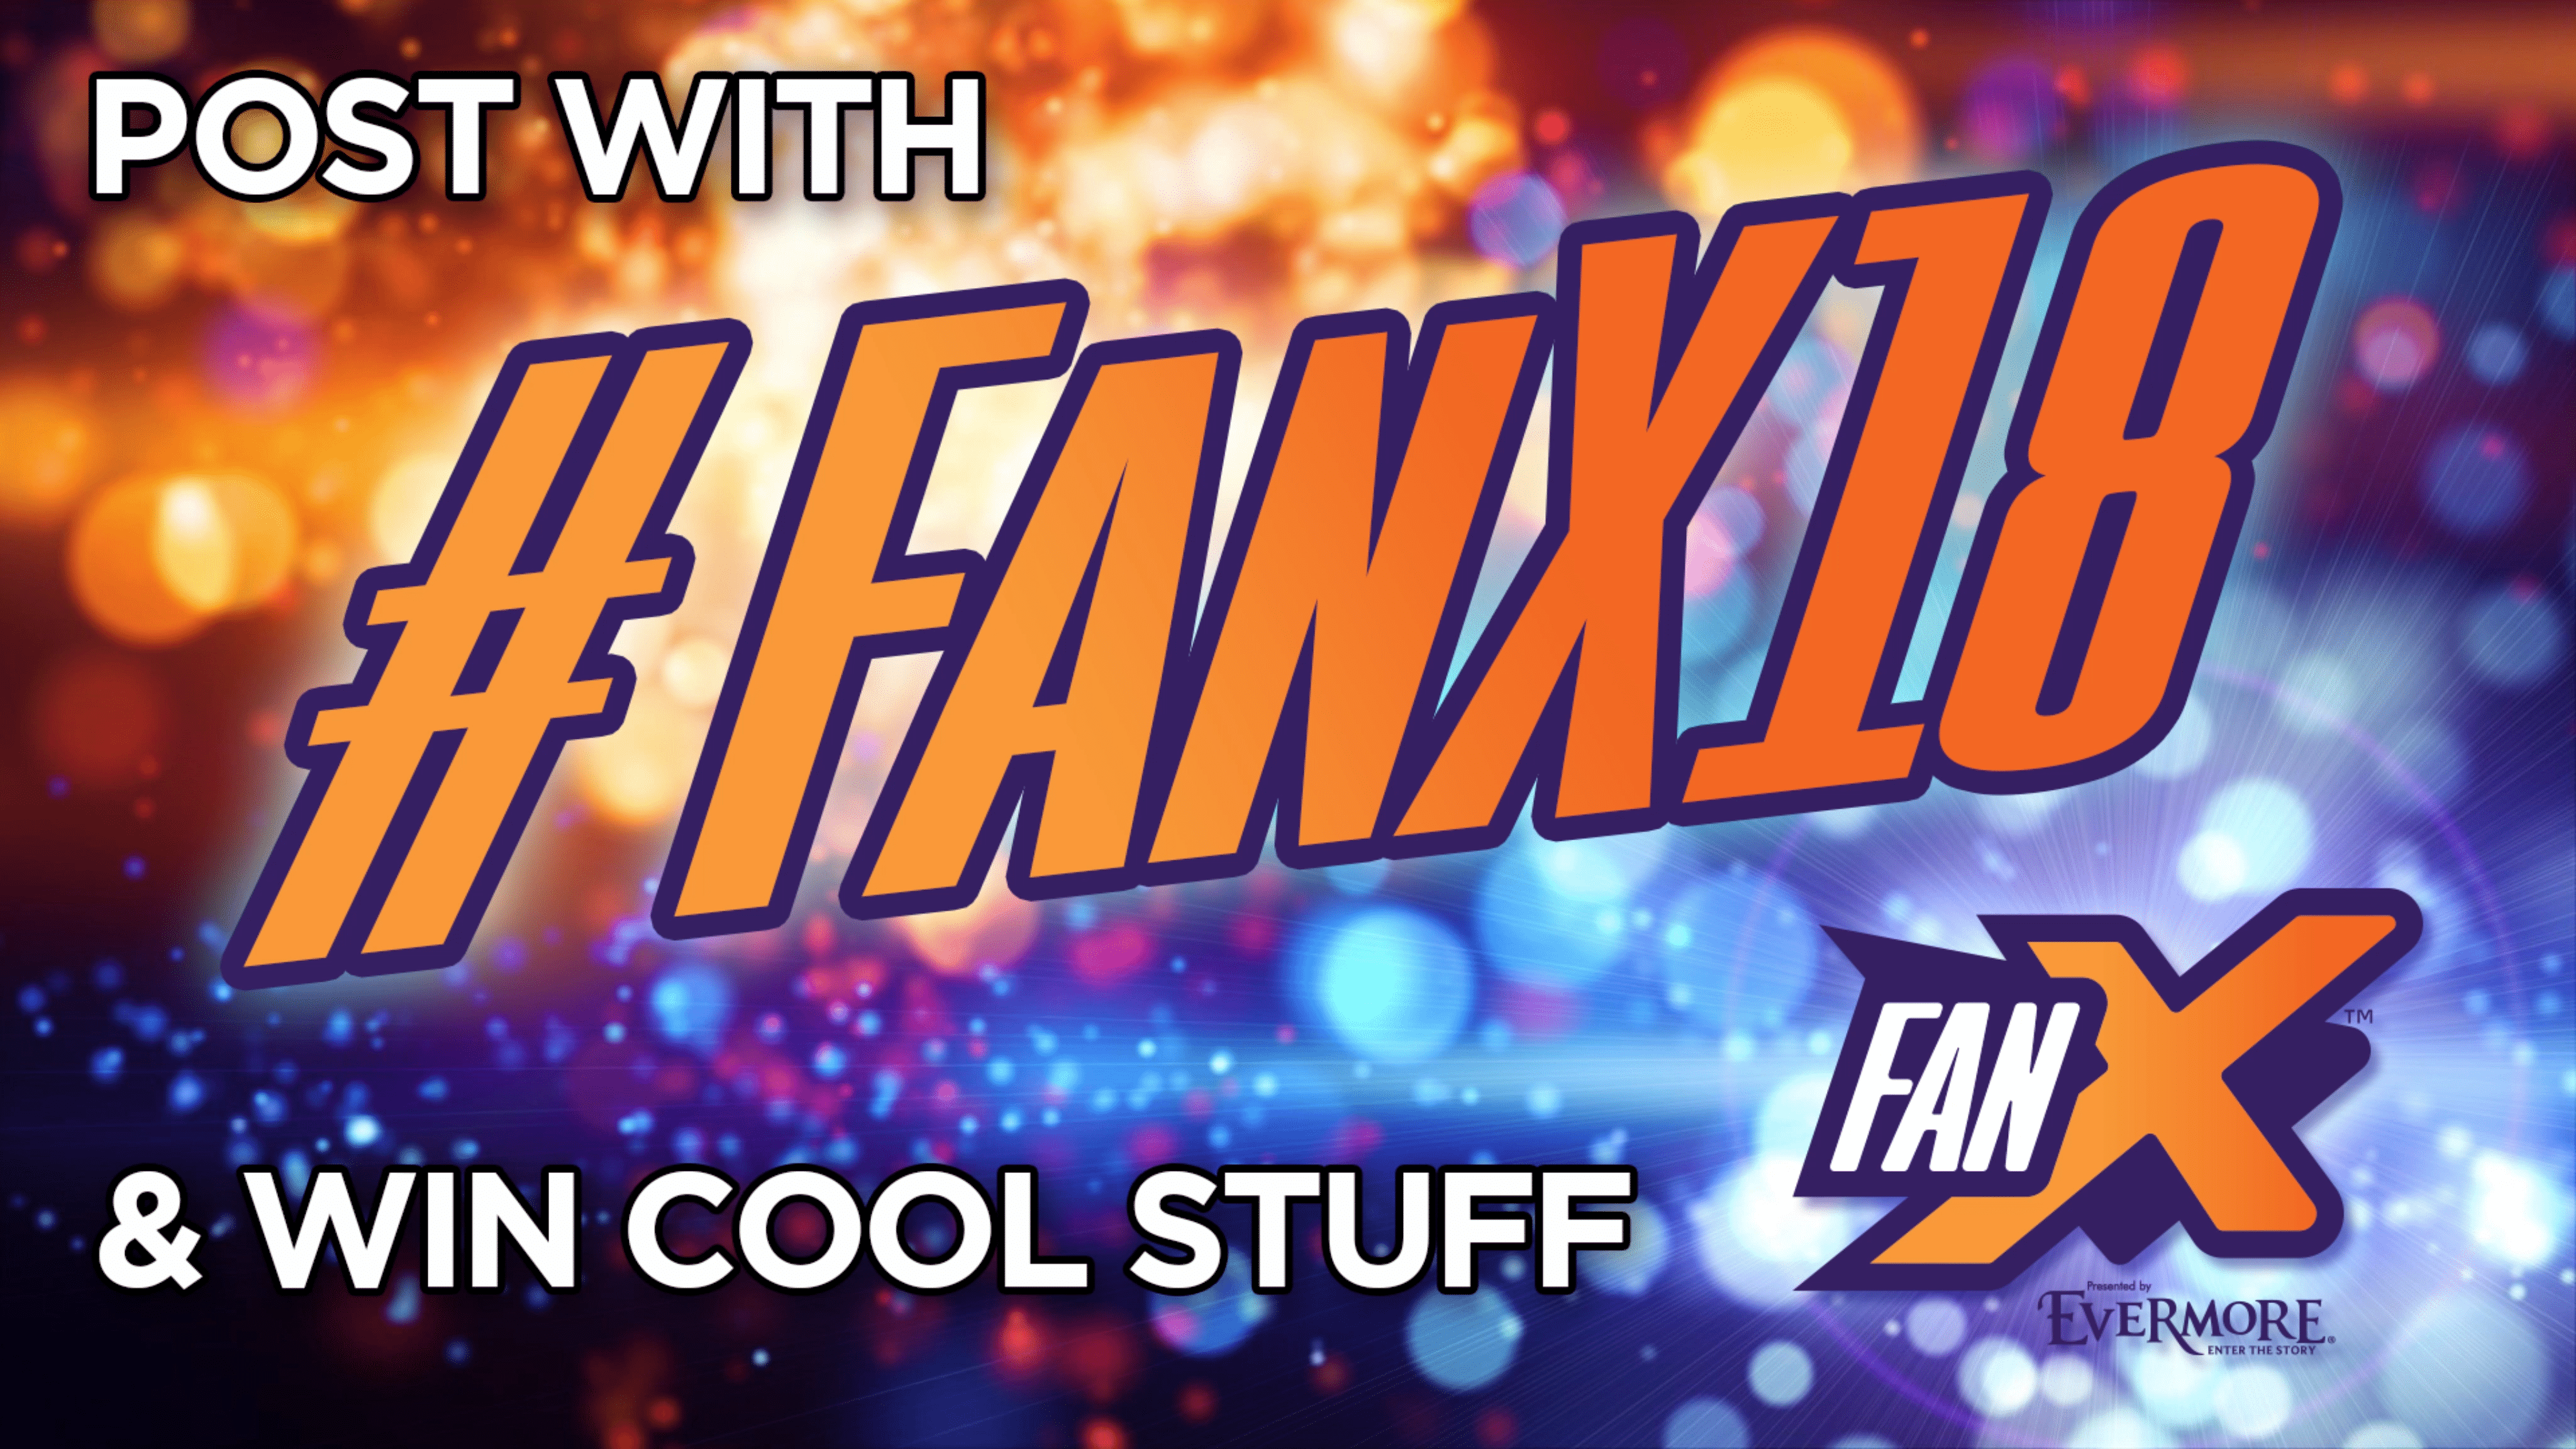 #FanX18 Hashtag Contest – Wednesday